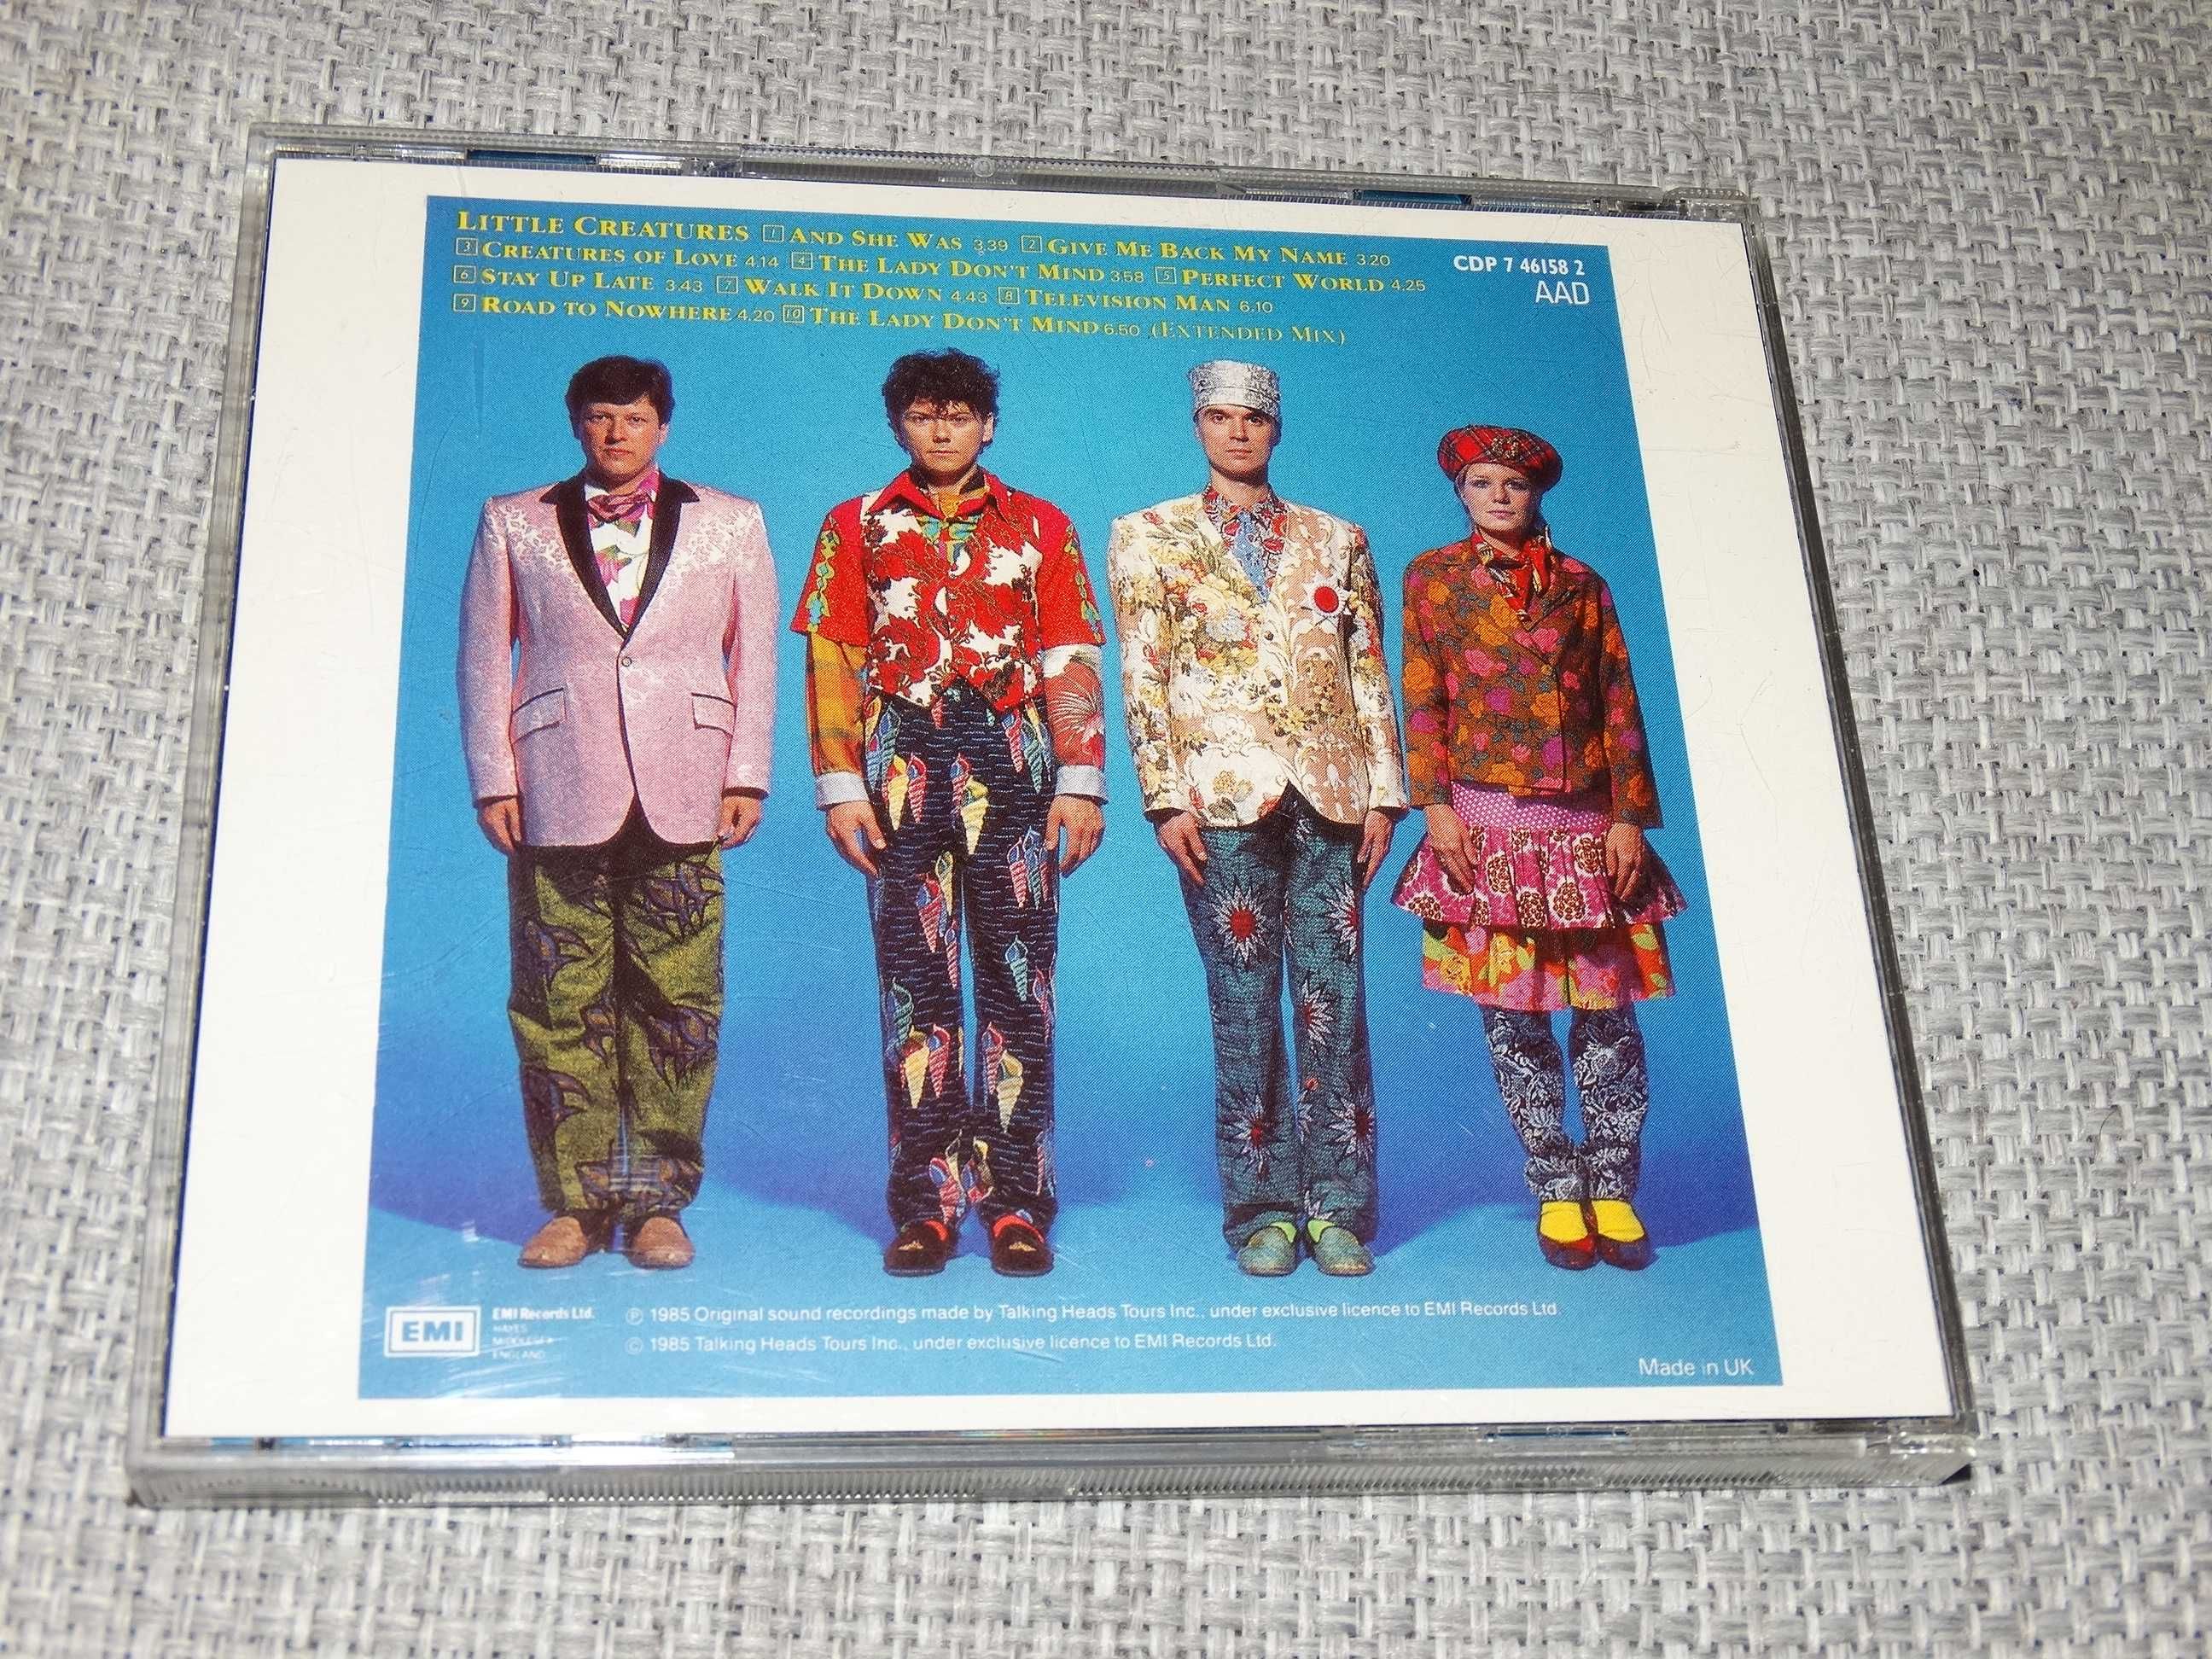 Płyta Talking Heads Little Creatures CD